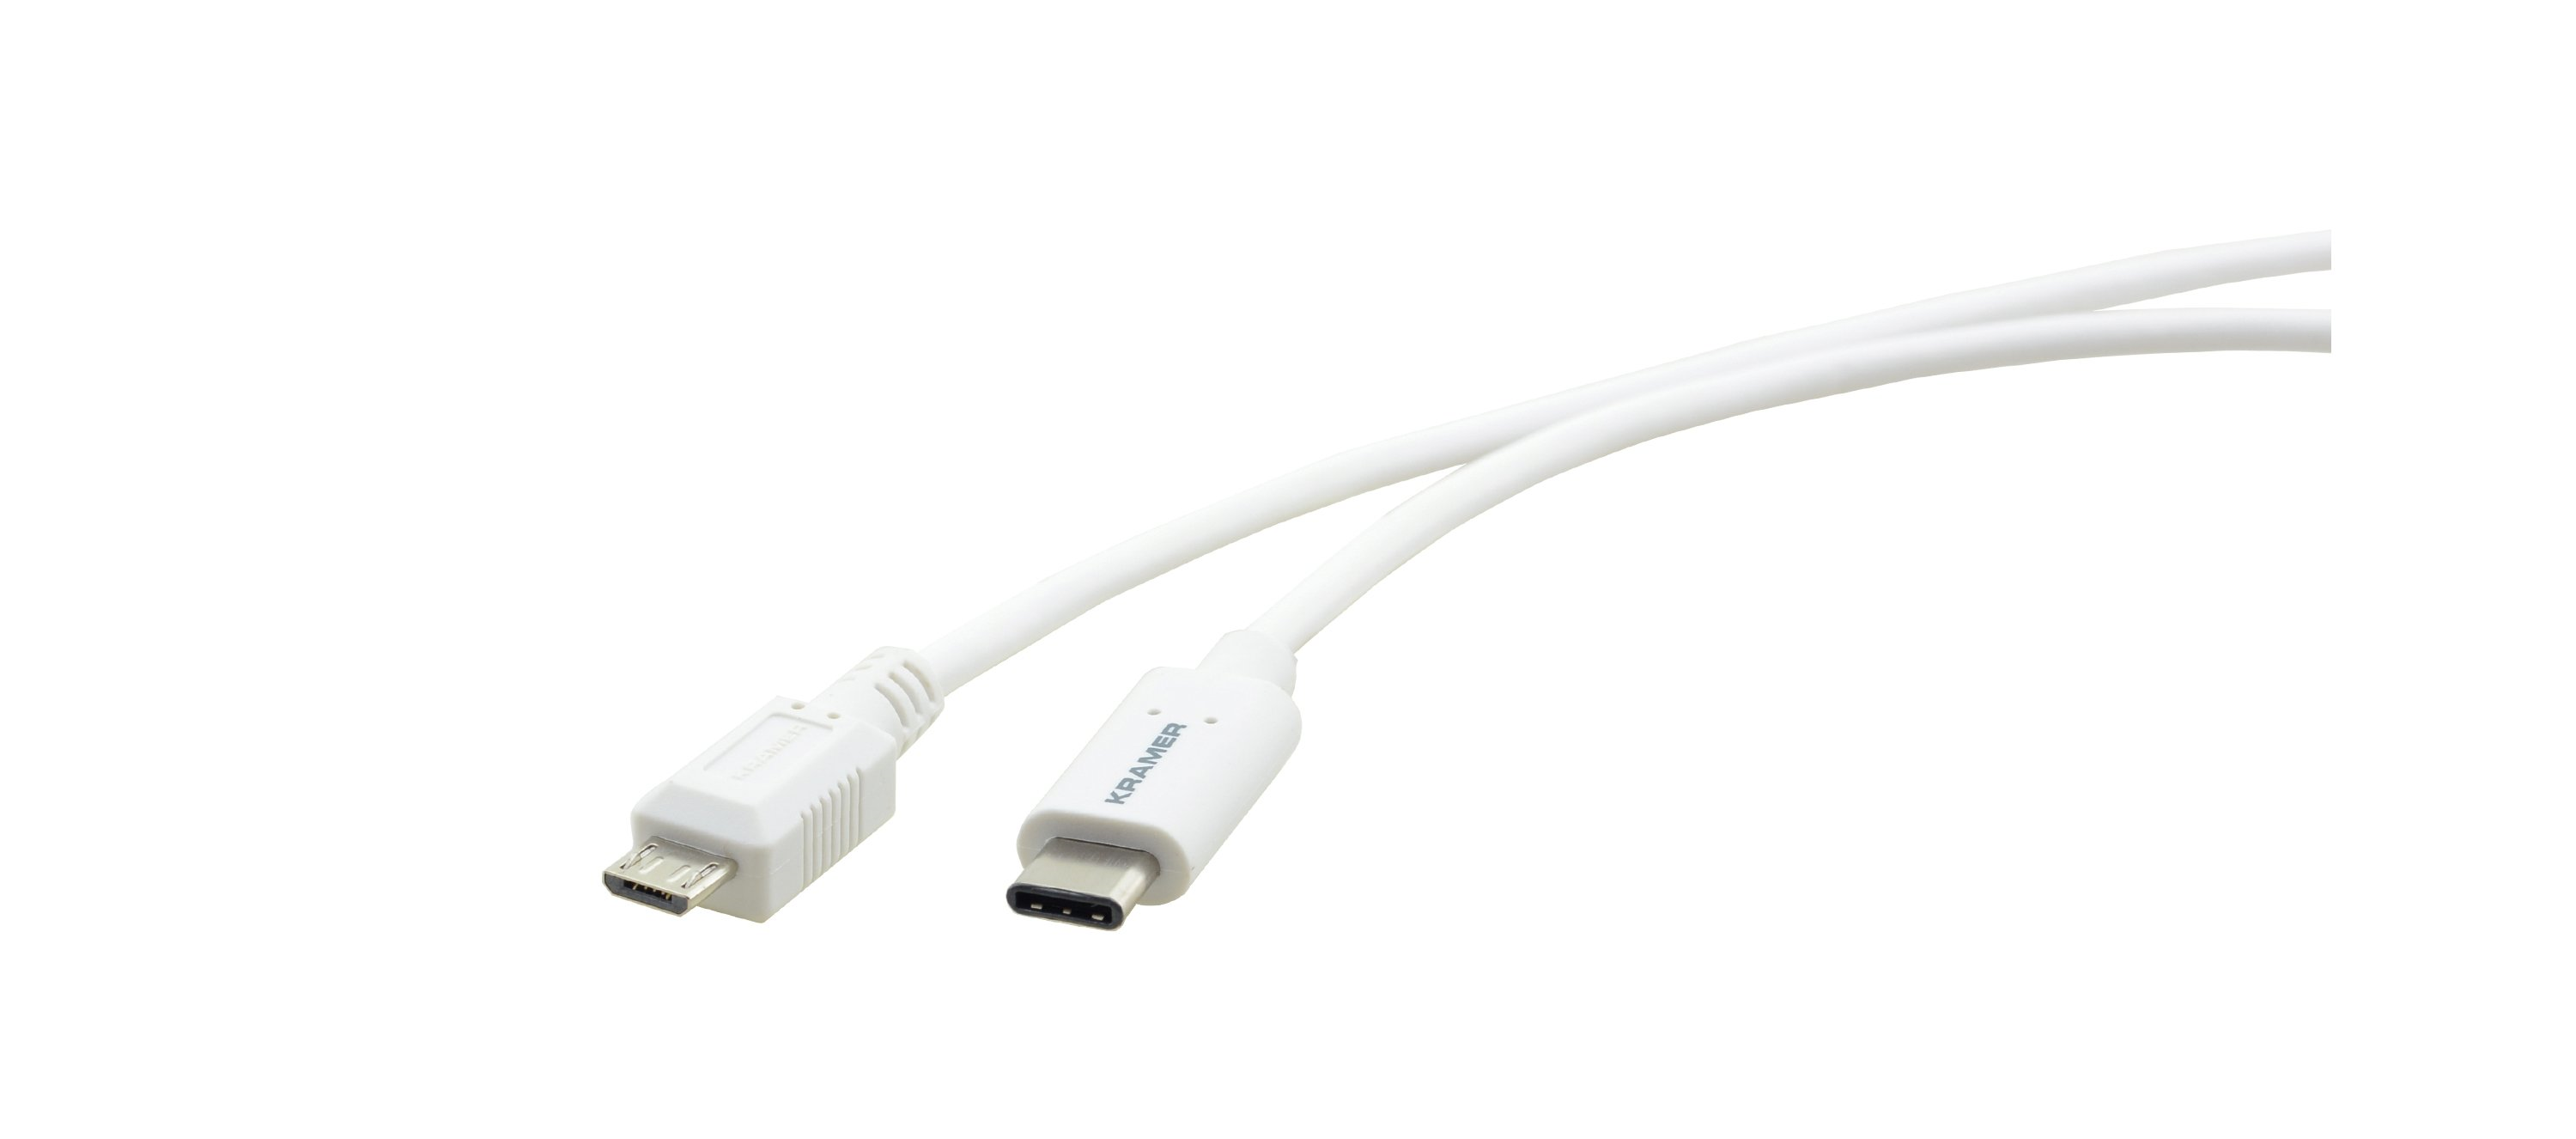 C-USB/CMicroB-3 USB 2.0 C(M) to MicroB(M) Cable-3ft